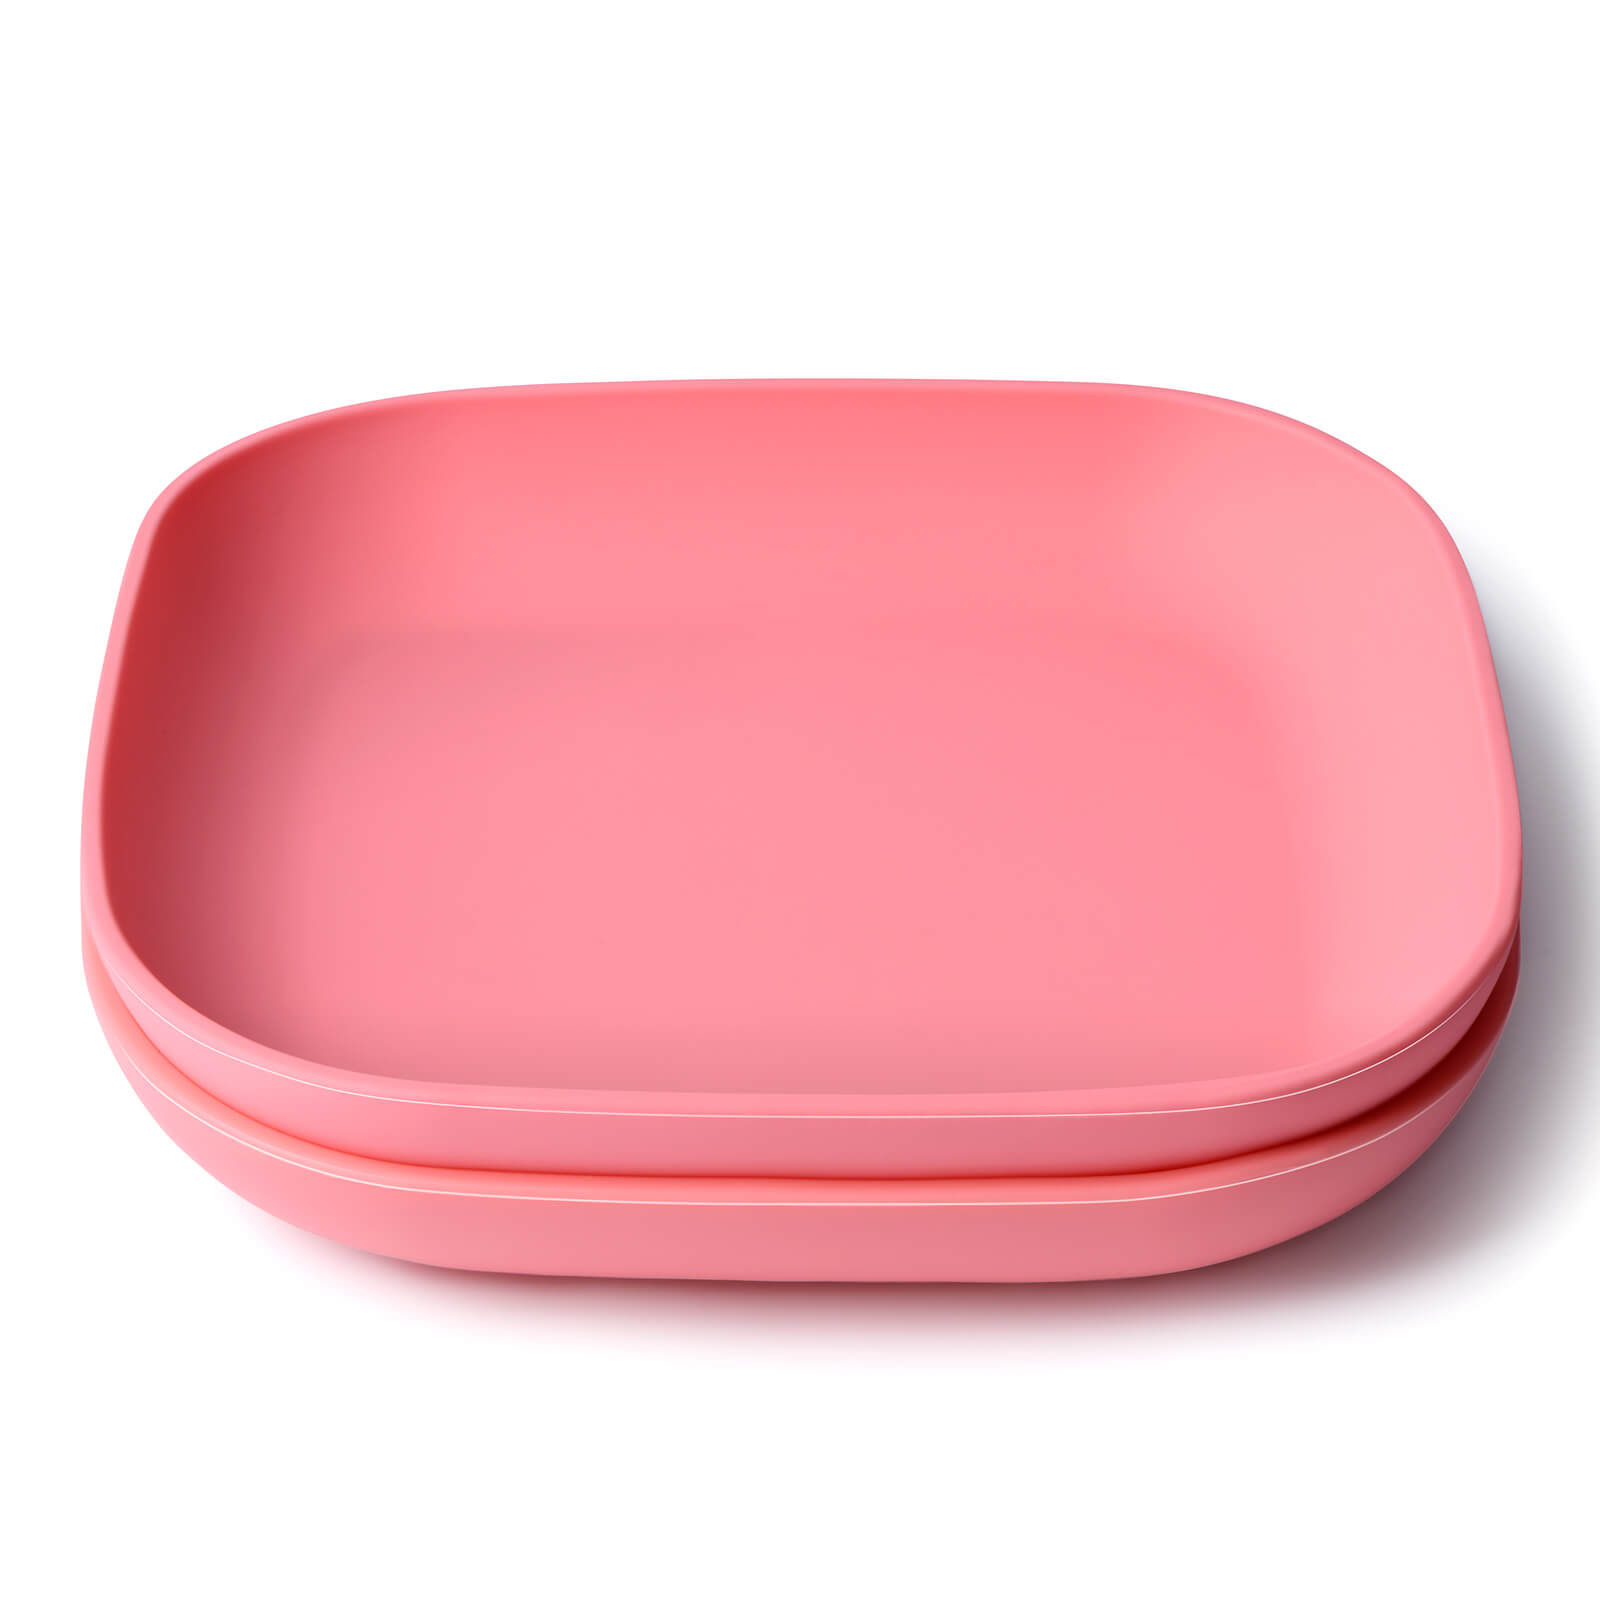 Babelio New Basics Silicone Toddler Plates 2 Pack (Pink) - babeliobaby